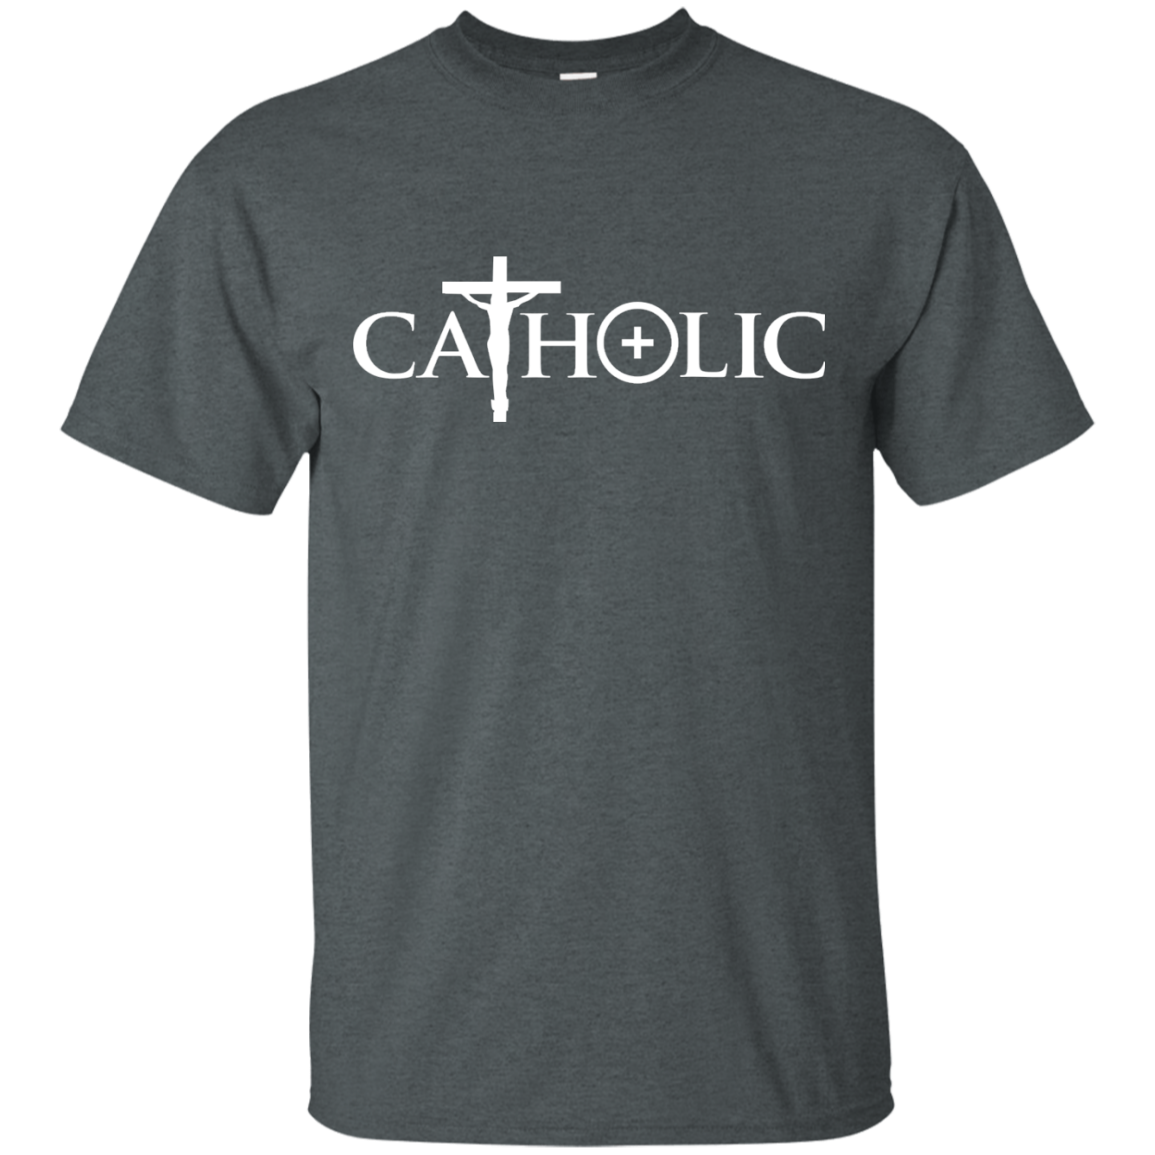 Catholic symbols t shirt. Pajama clipart tshirt